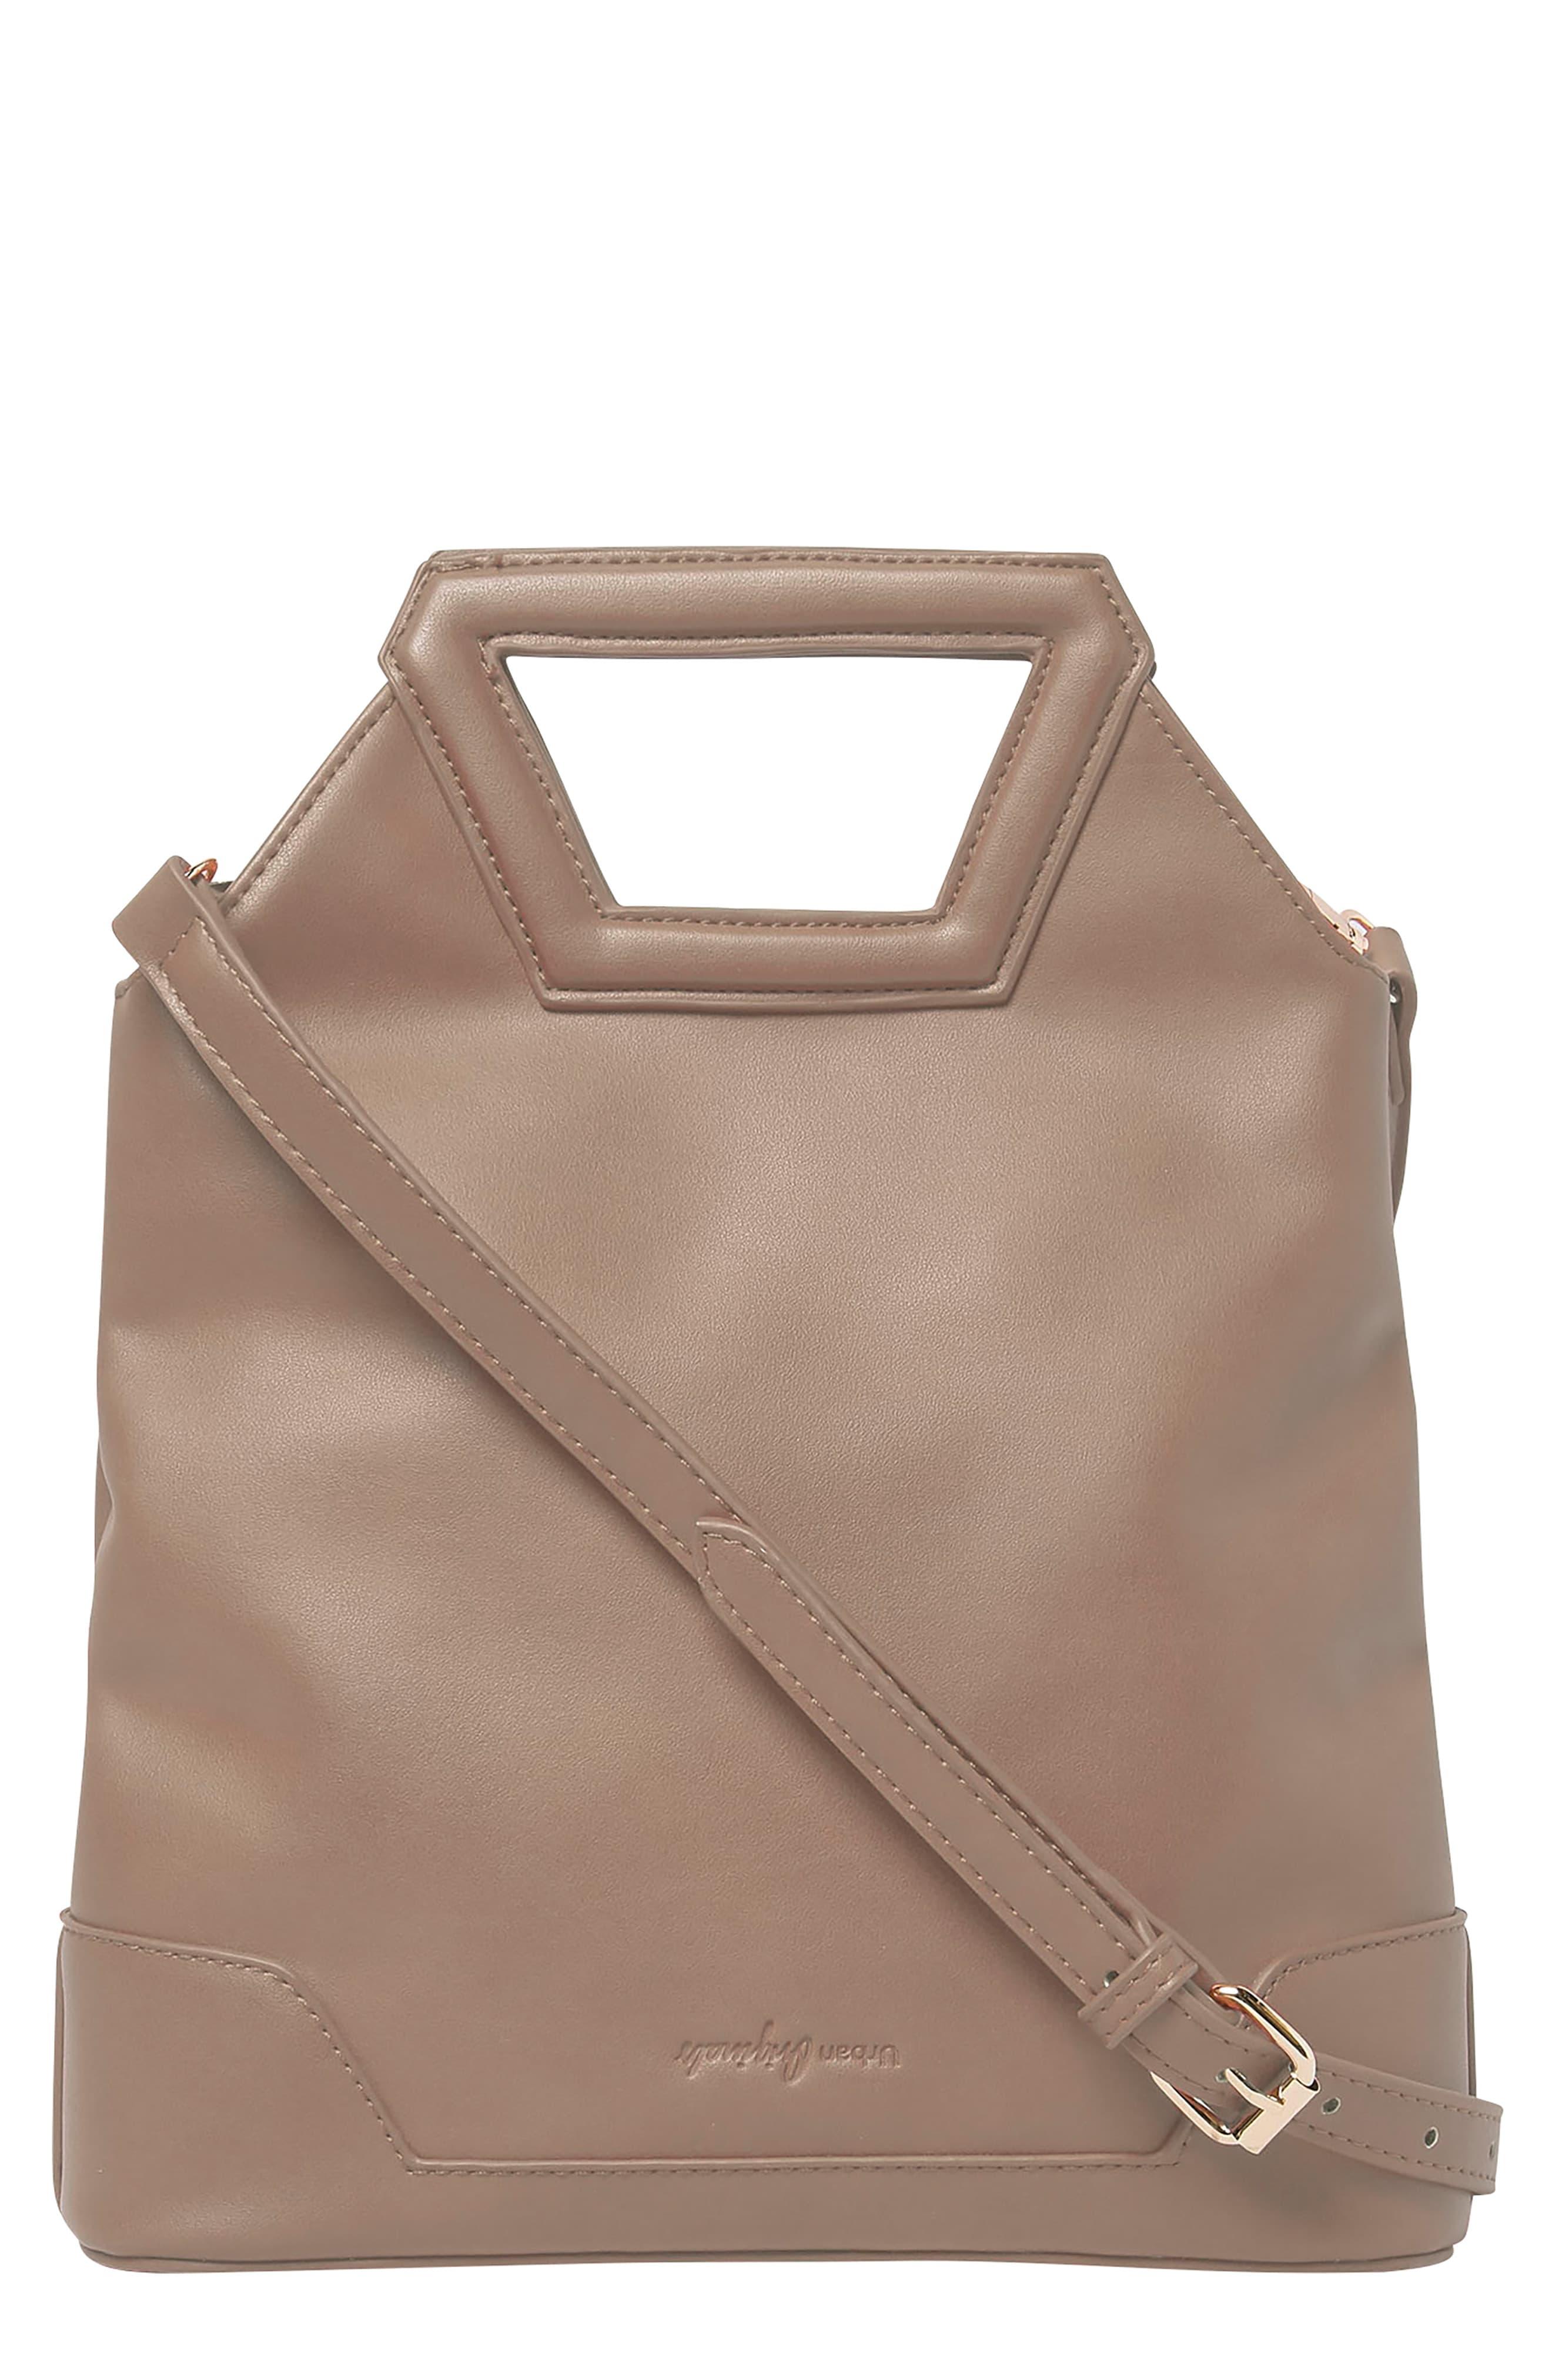 Urban Originals Vegan Leather Crossbody Bag in Stone (Brown) - Lyst